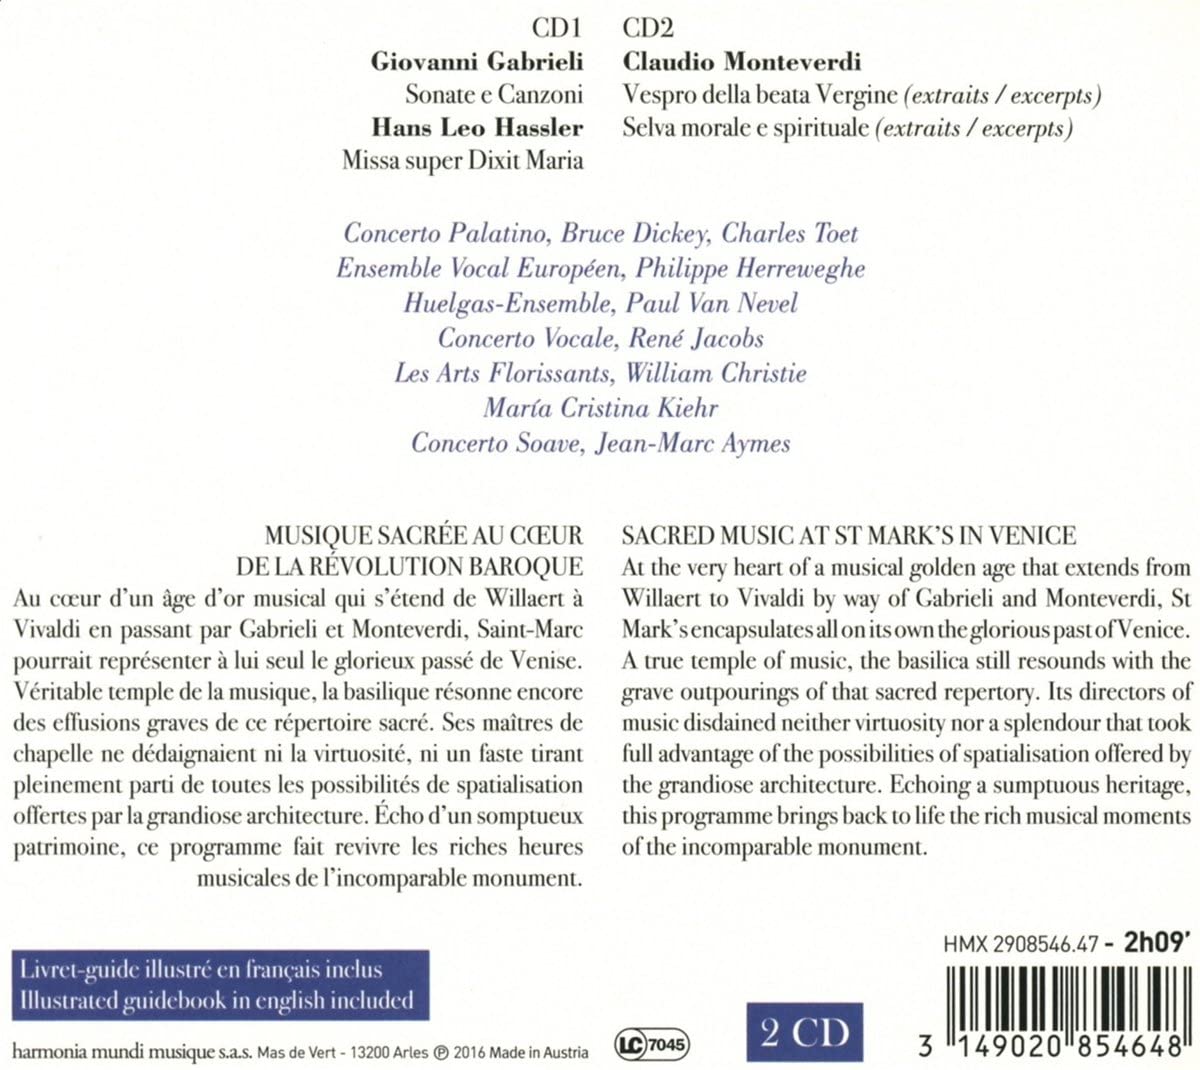 Resonances - Saint-Marc et Venise: Sacred music at the heart of the Baroque revolution - slide-1